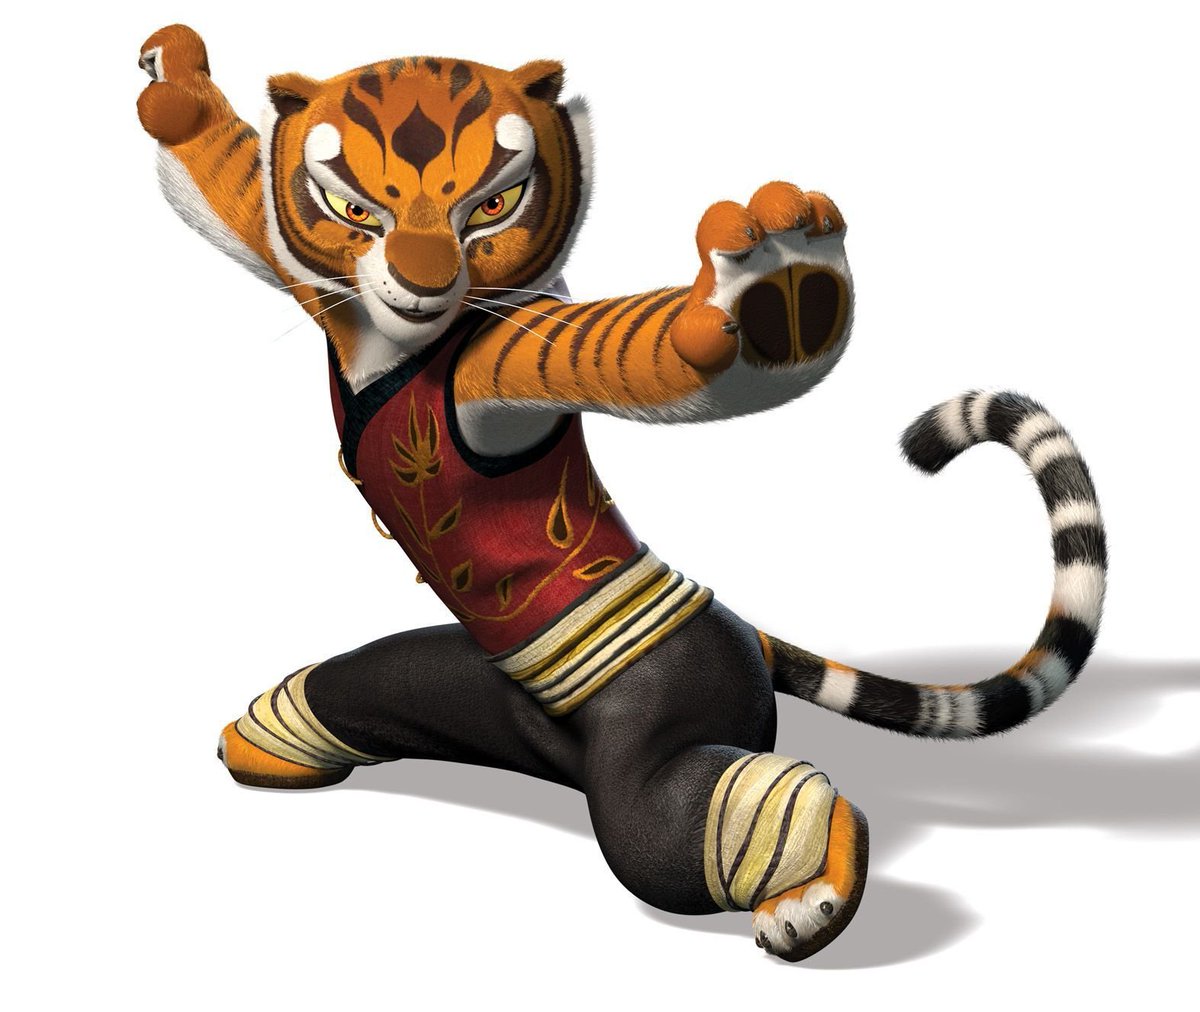 Tigress from Kung Fu Panda, Huge crush